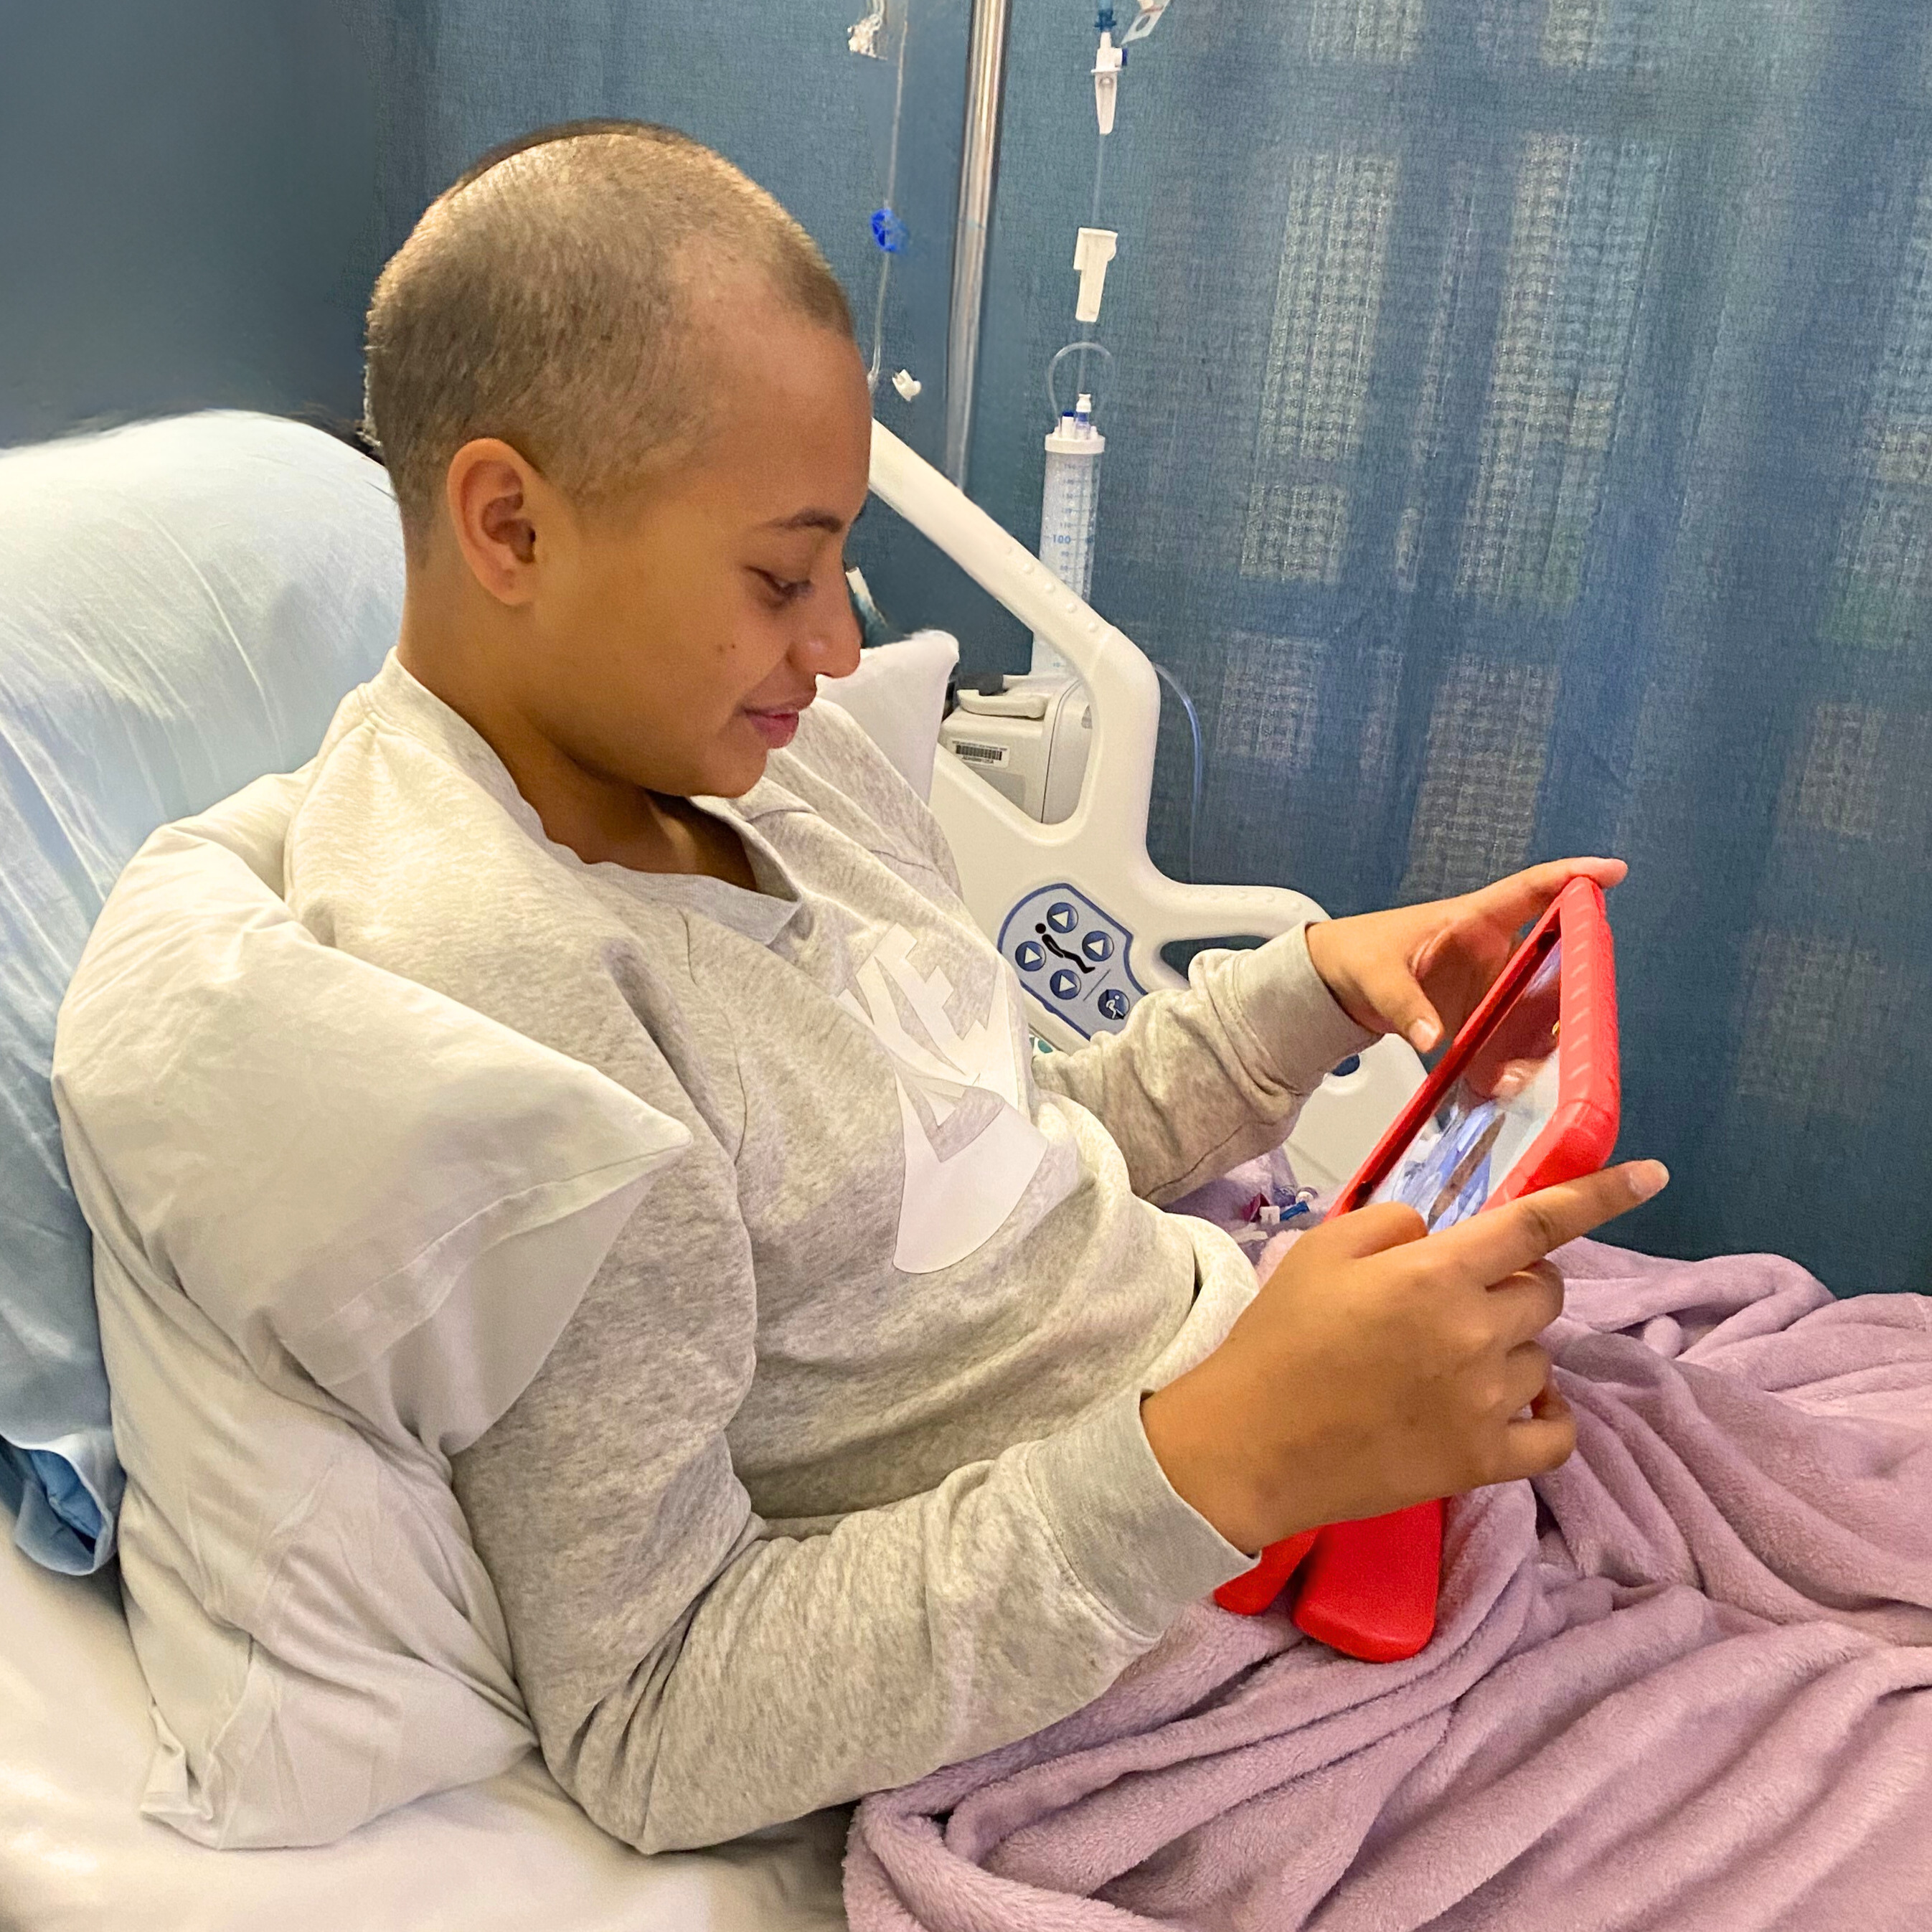 Rangatahi using the Kubi Robot in hospital bed